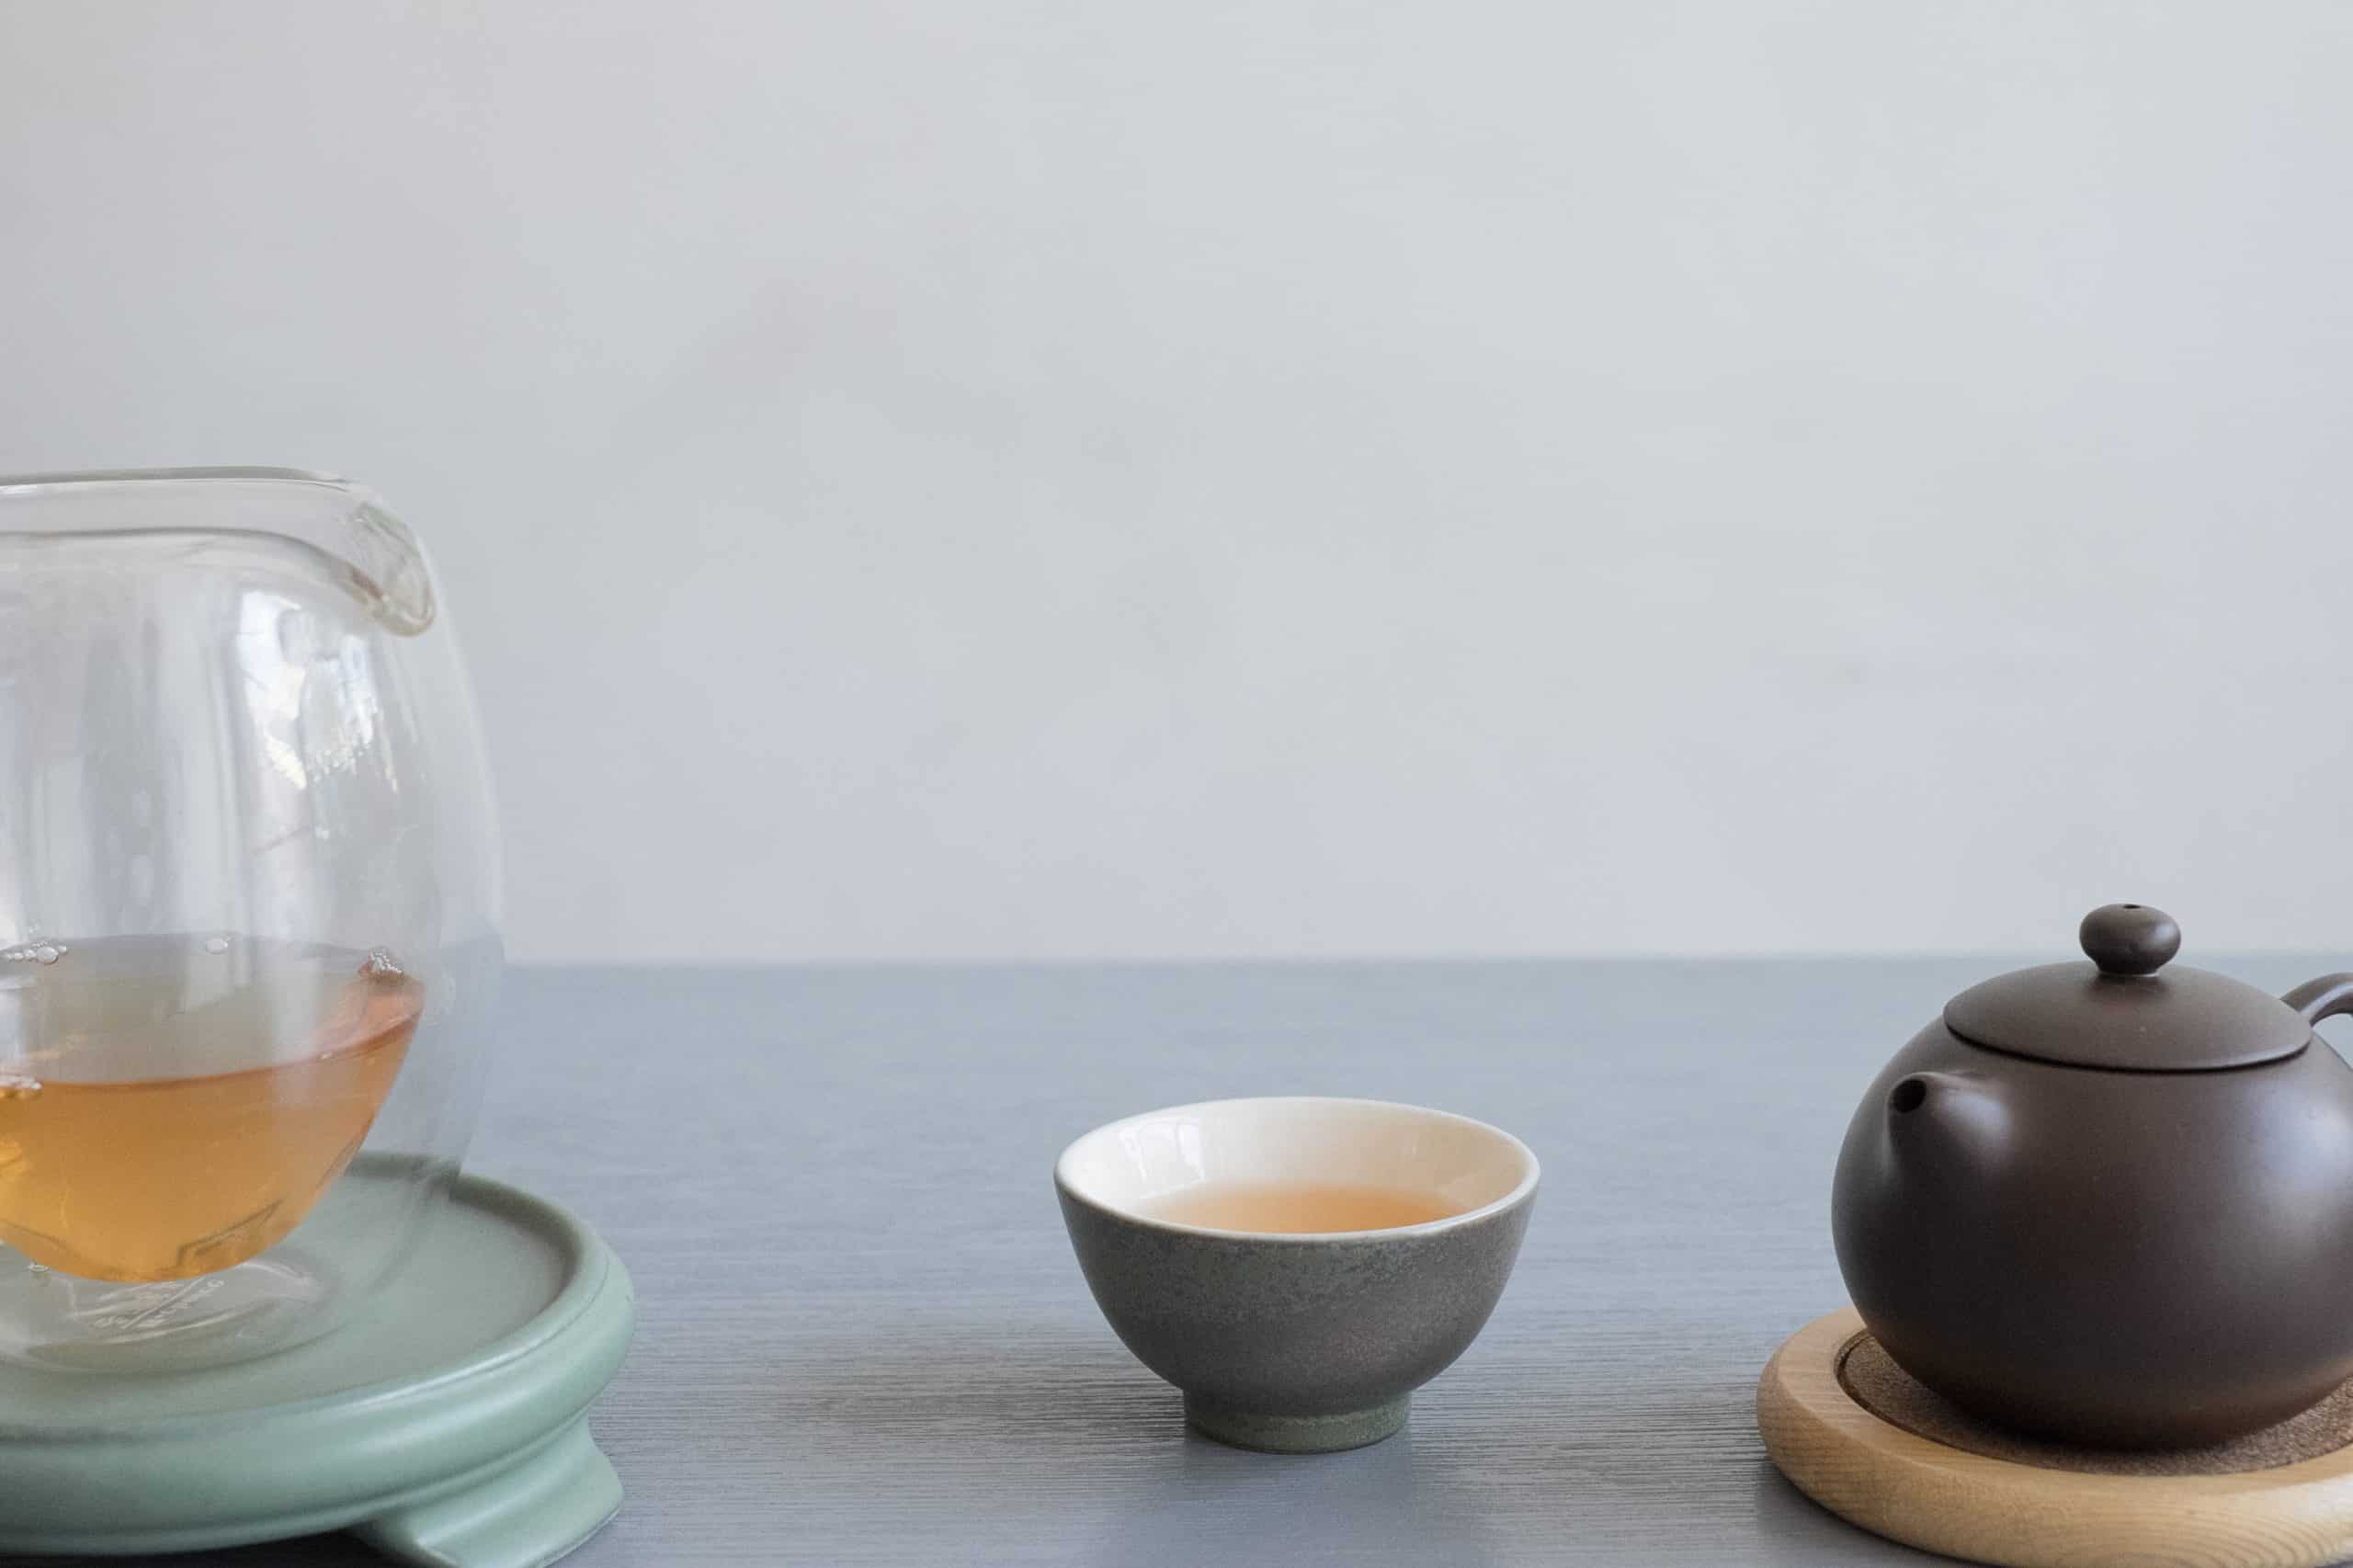 Purple Clay Teacup Chinese Gaiwan Hand Made Tea Cup Saucer Set Ceramic Tea Bowl